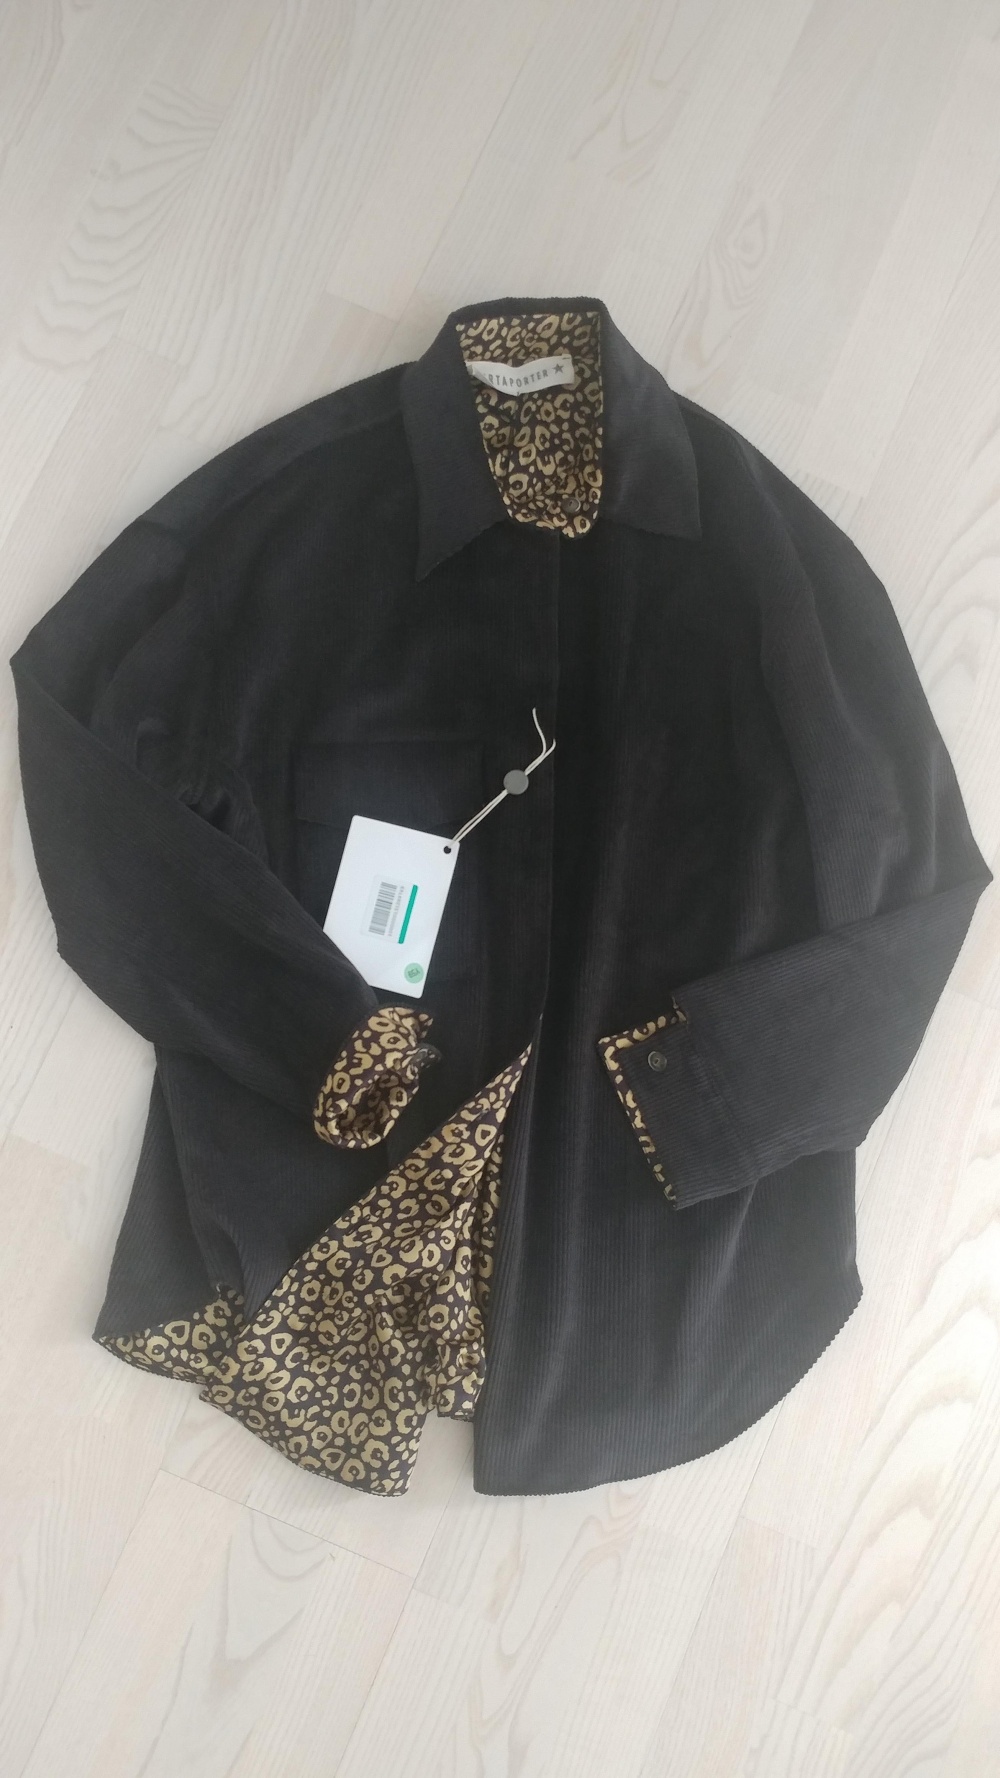 Куртка - рубашка SHIRTAPORTER р. L/XL/XXL/plus size